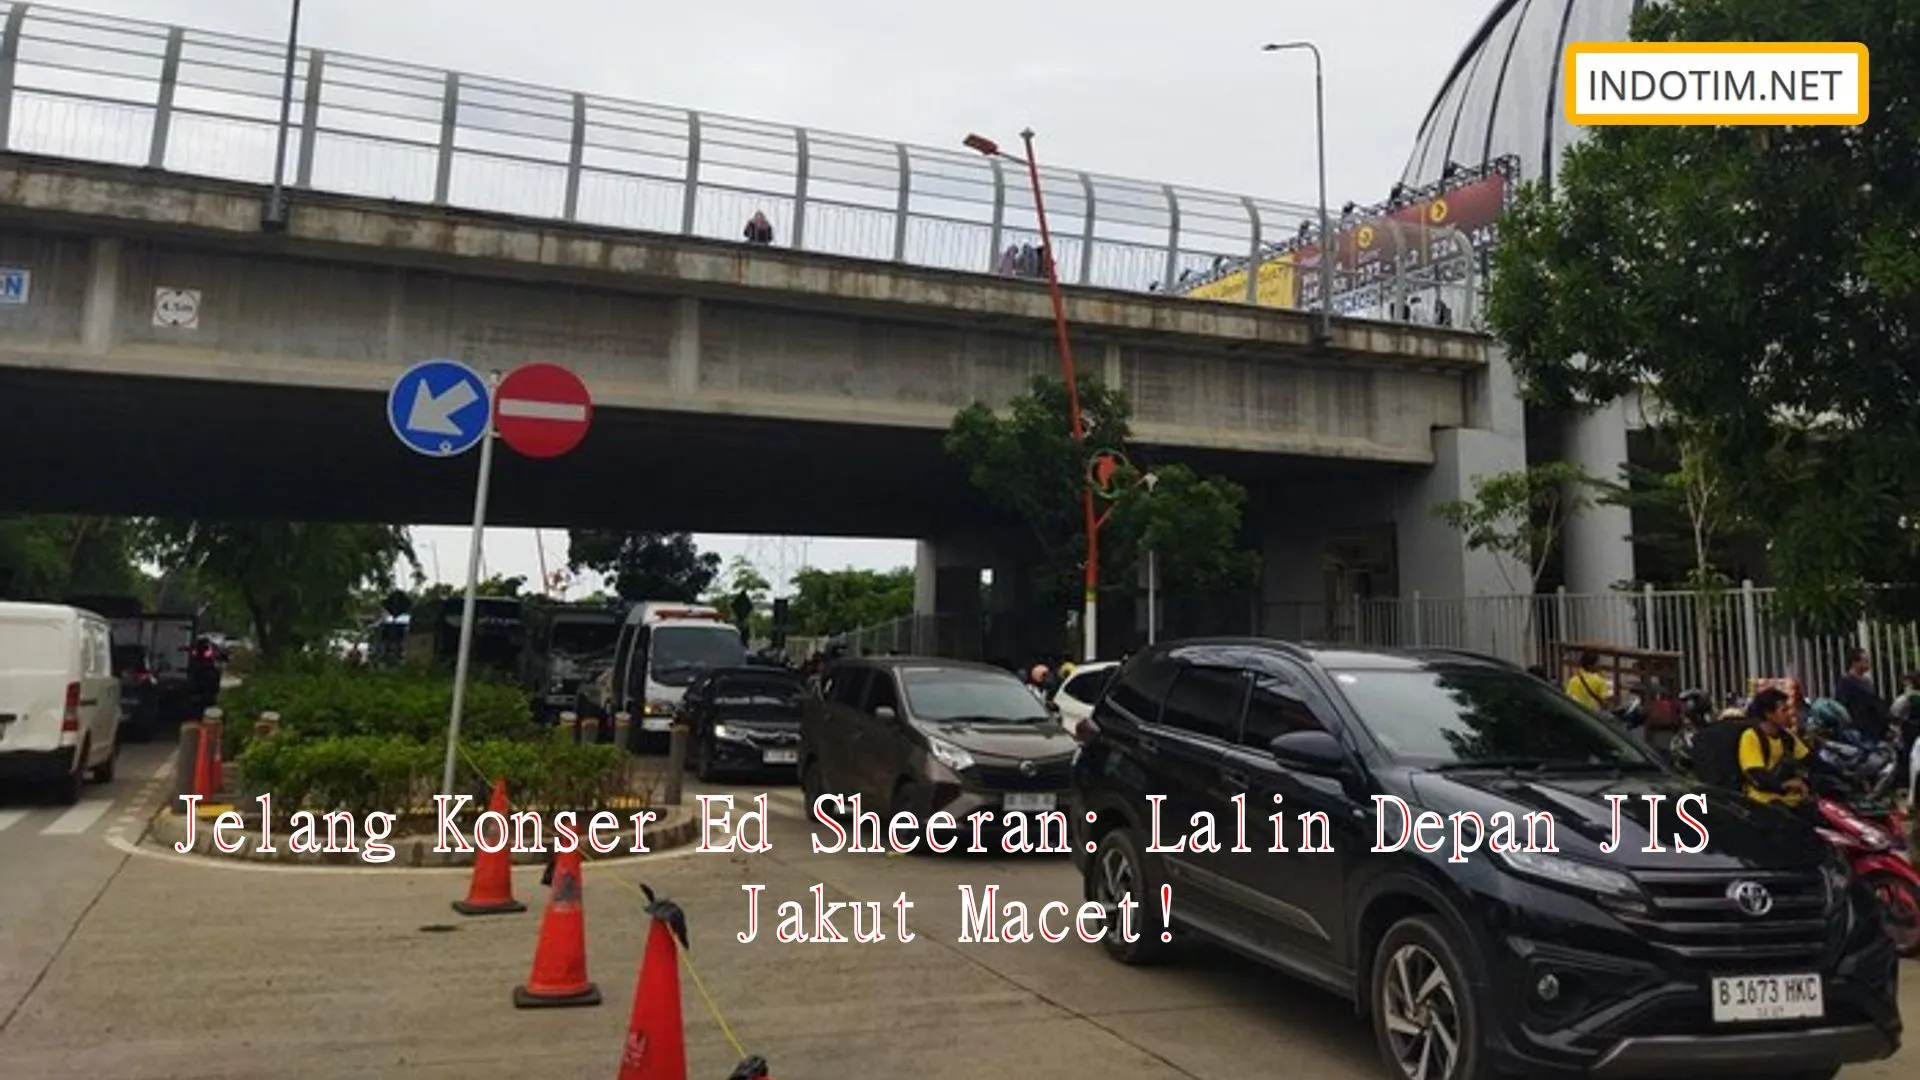 Jelang Konser Ed Sheeran: Lalin Depan JIS Jakut Macet!